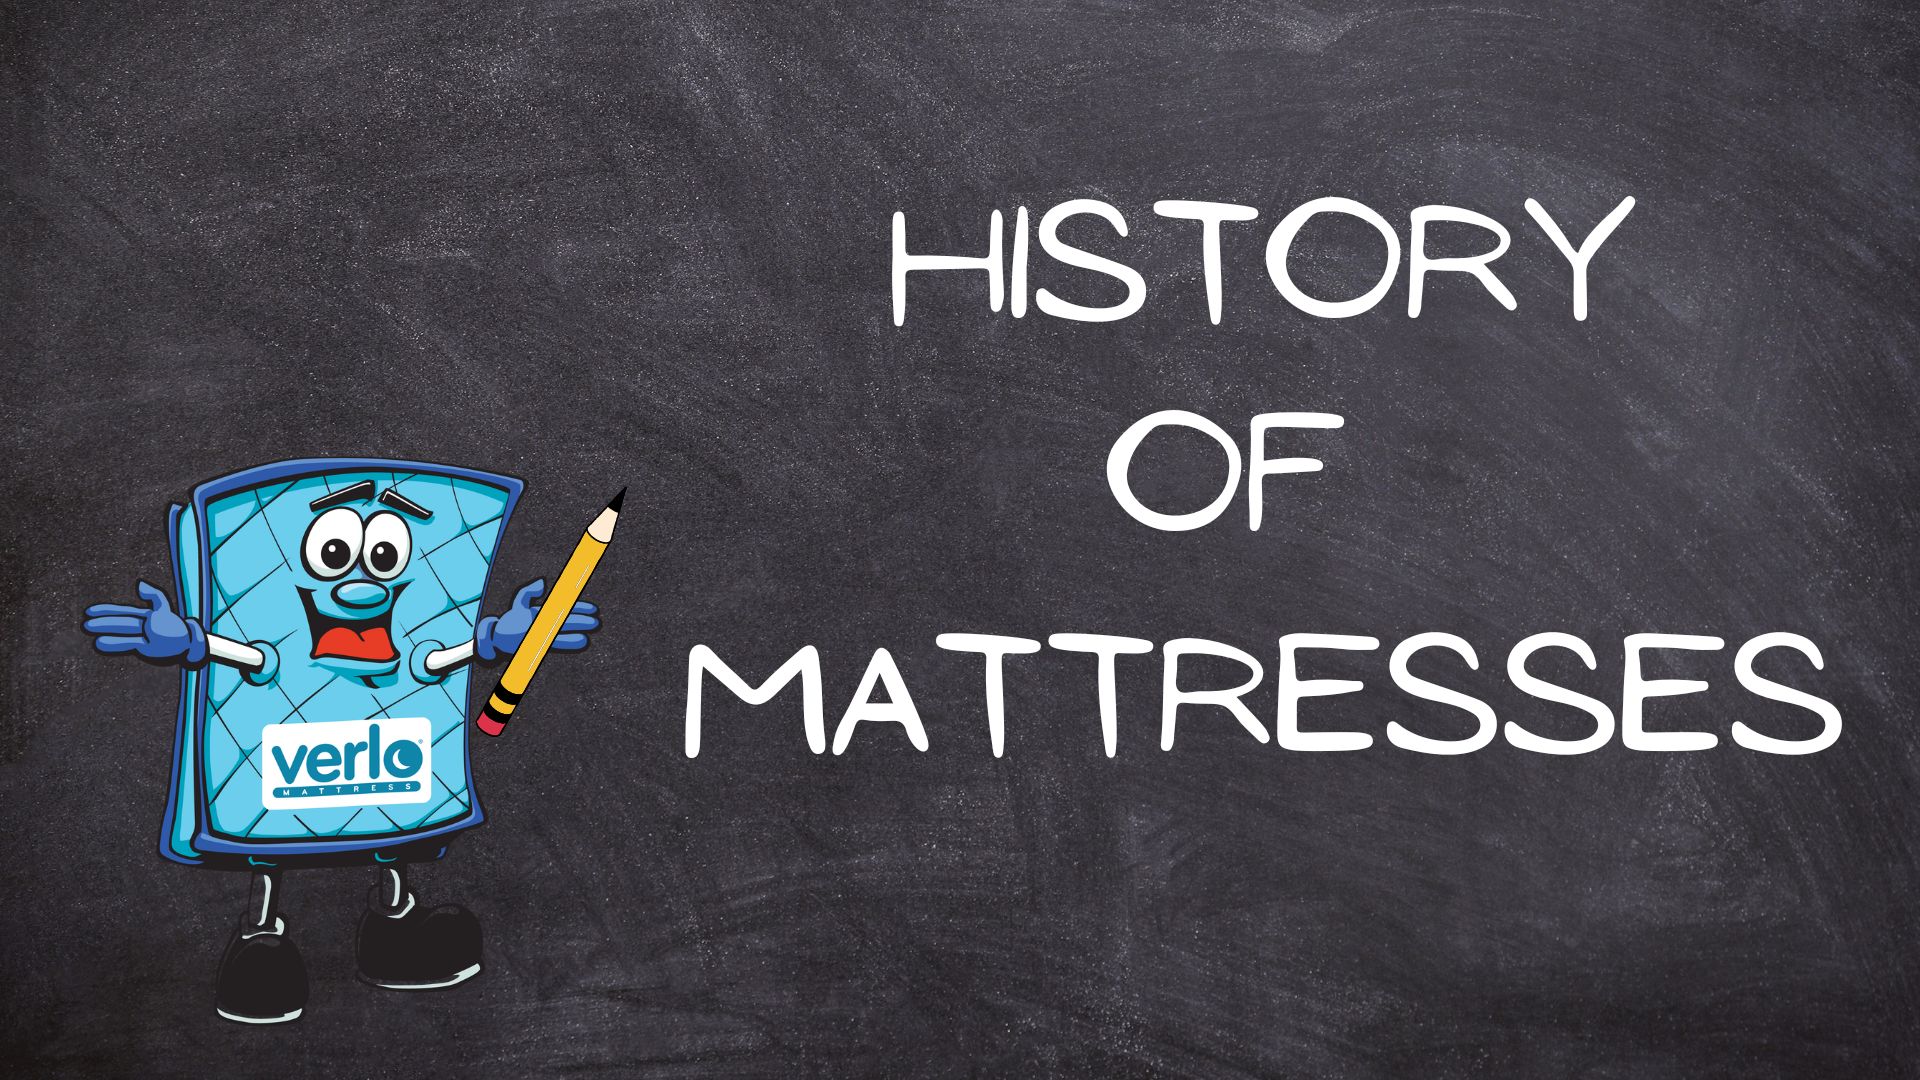 verlo mattresses all types reviews